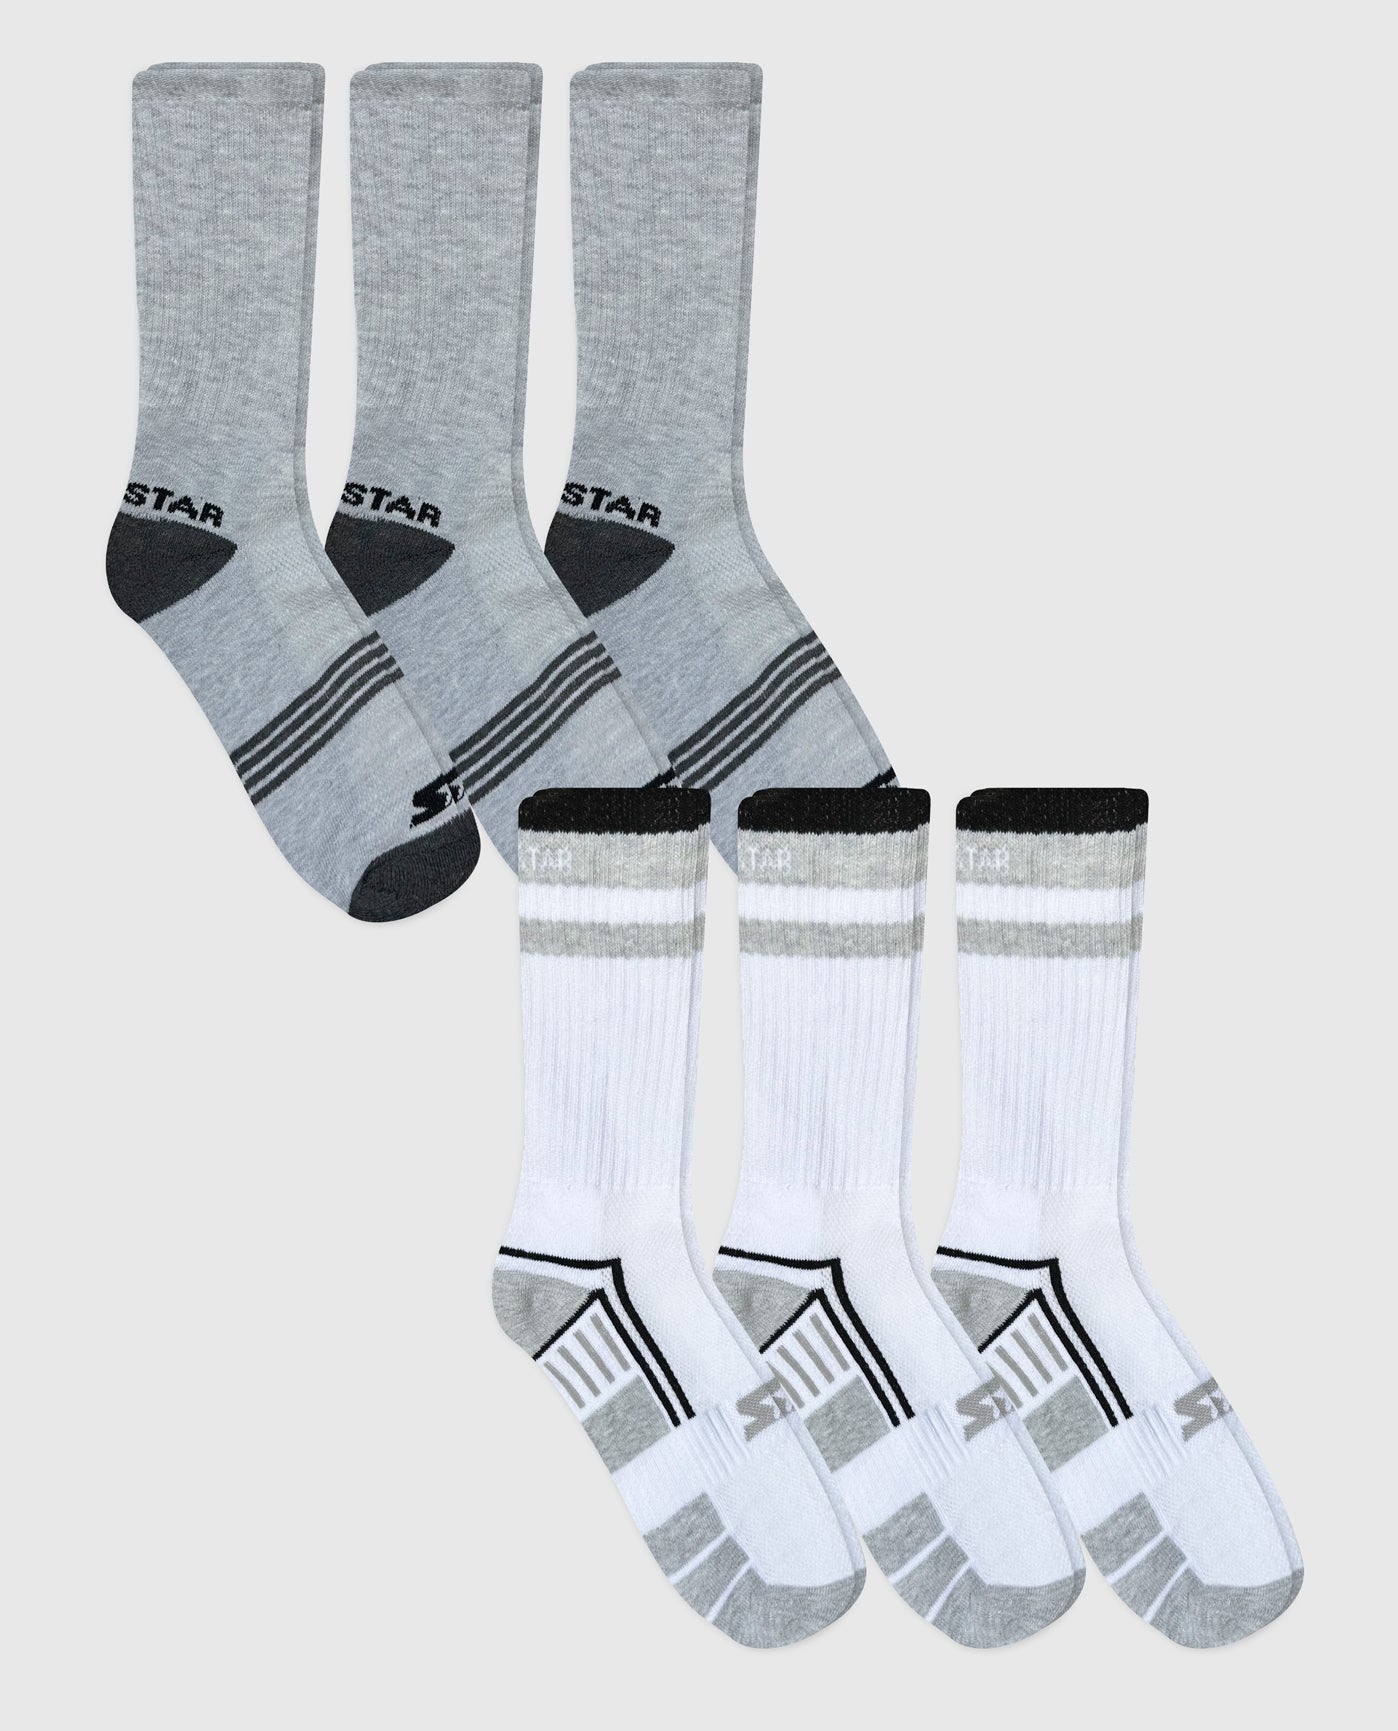 Starter Men's Half Cushion Crew Socks, 6-Pack, Size: Sock Size: 10-13. Shoe Size: 6-12, Multicolor